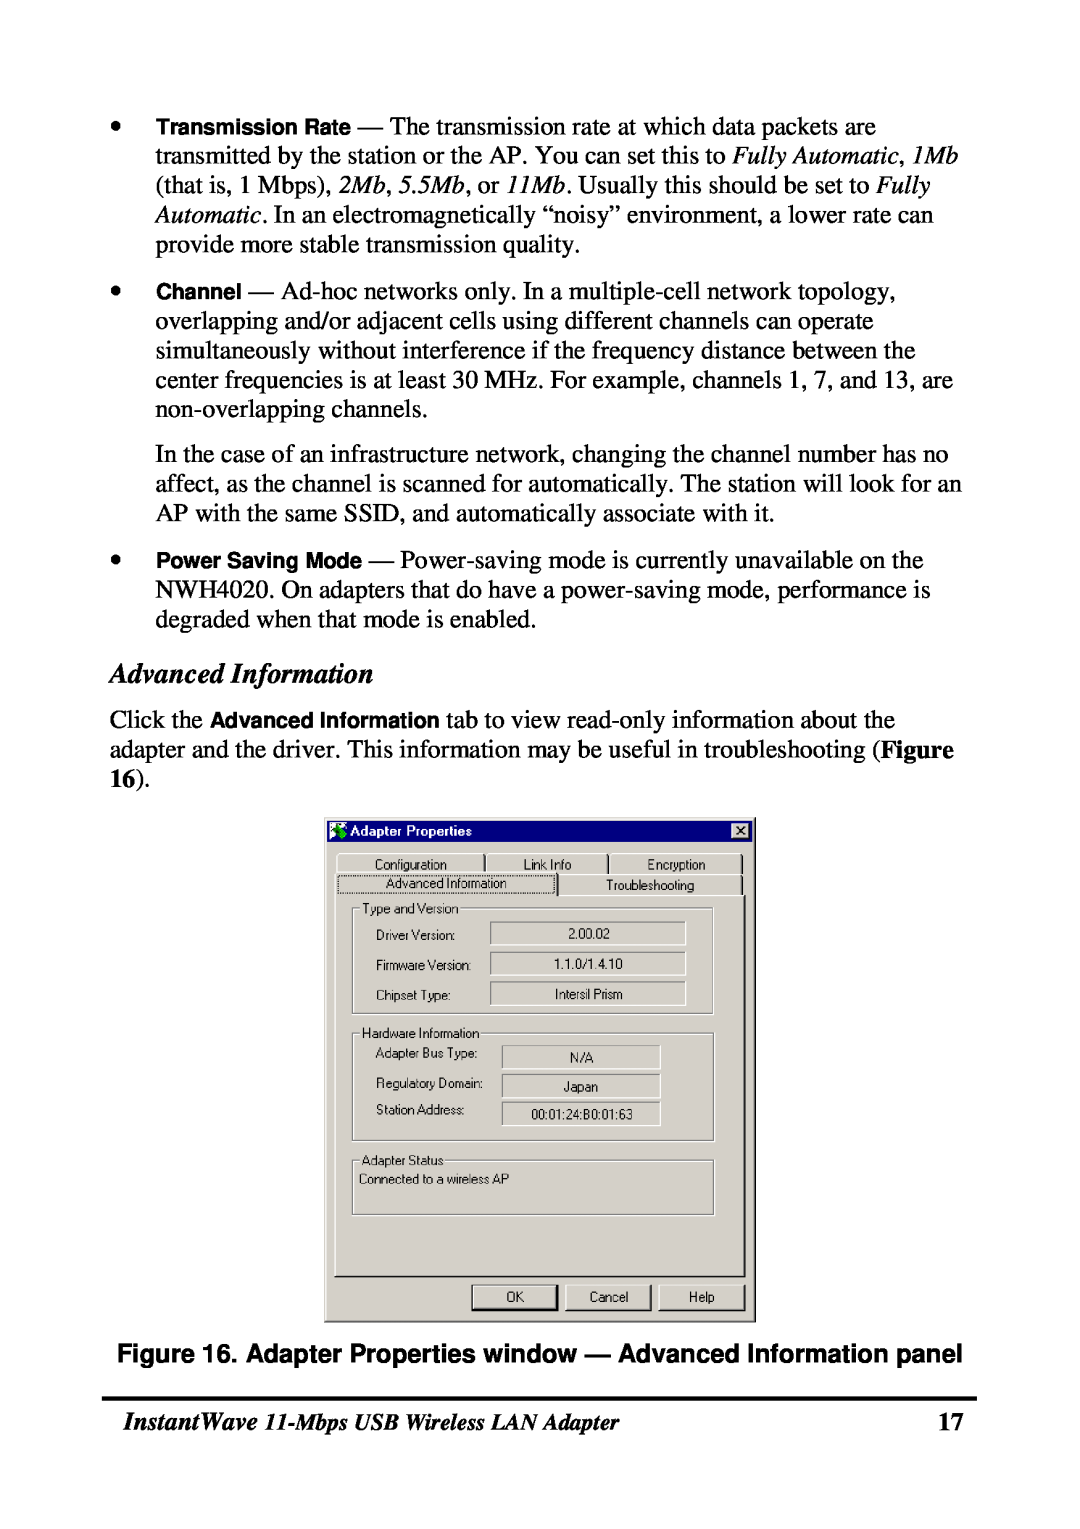 NDC comm NWH4020 manual Adapter Properties window - Advanced Information panel 